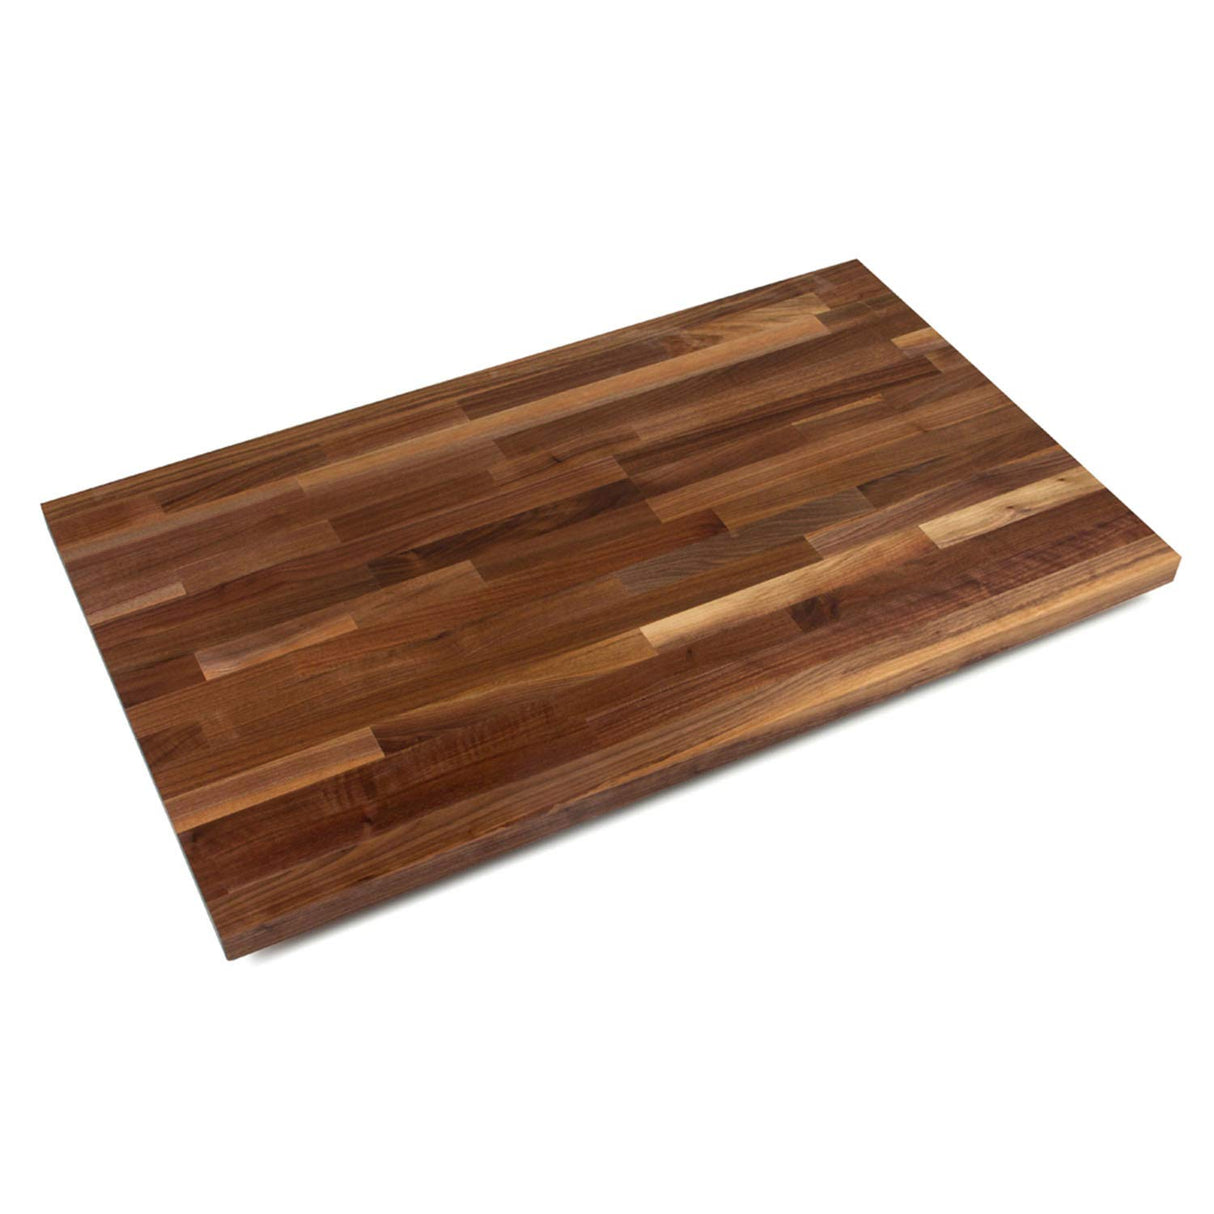 John Boos WALKCT-BL4838-O Blended Walnut Solid Wood Finish Natural Edge Grain Kitchen Cutting Board Island Counter Top Butcher Block, 48" x 38" 1.5"